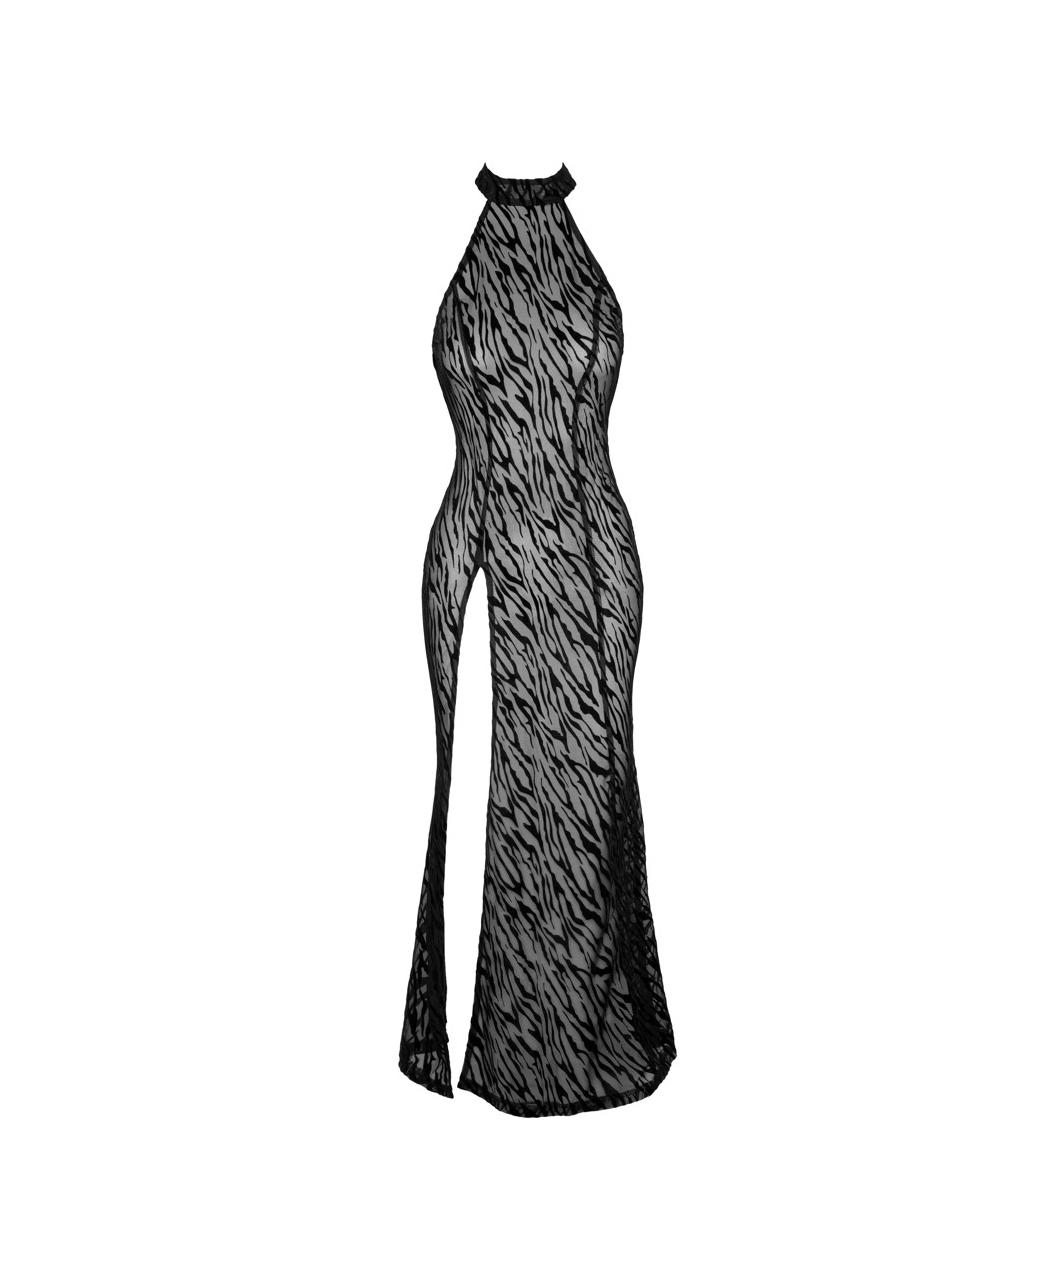 Noir Handmade black sheer mesh dress with flock print